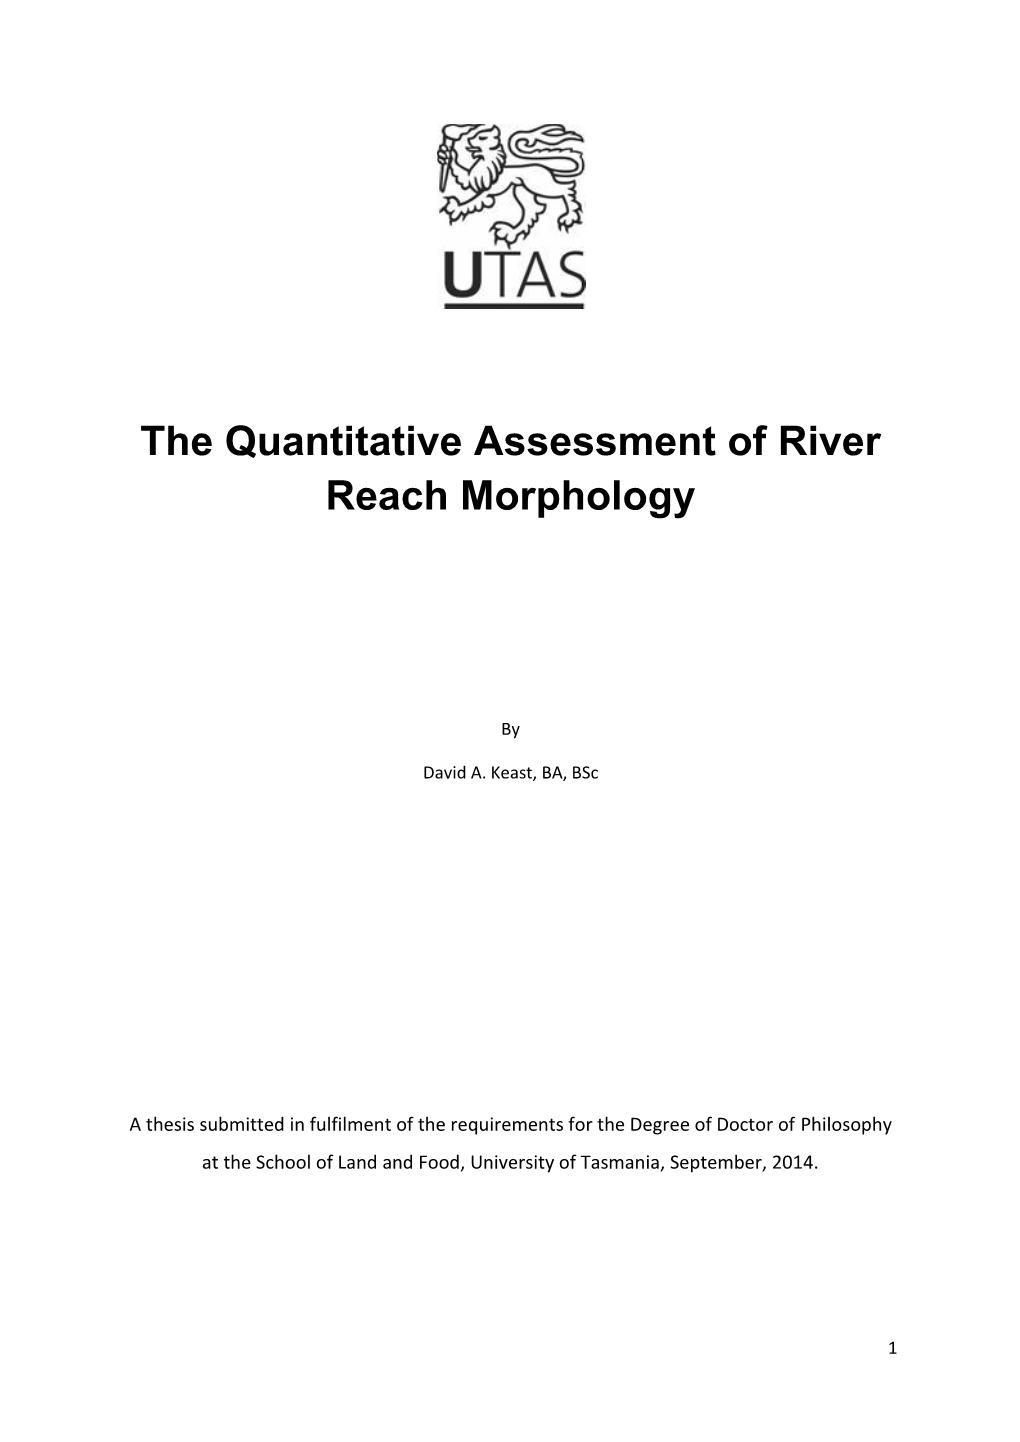 The Quantitative Assessment of River Reach Morphology